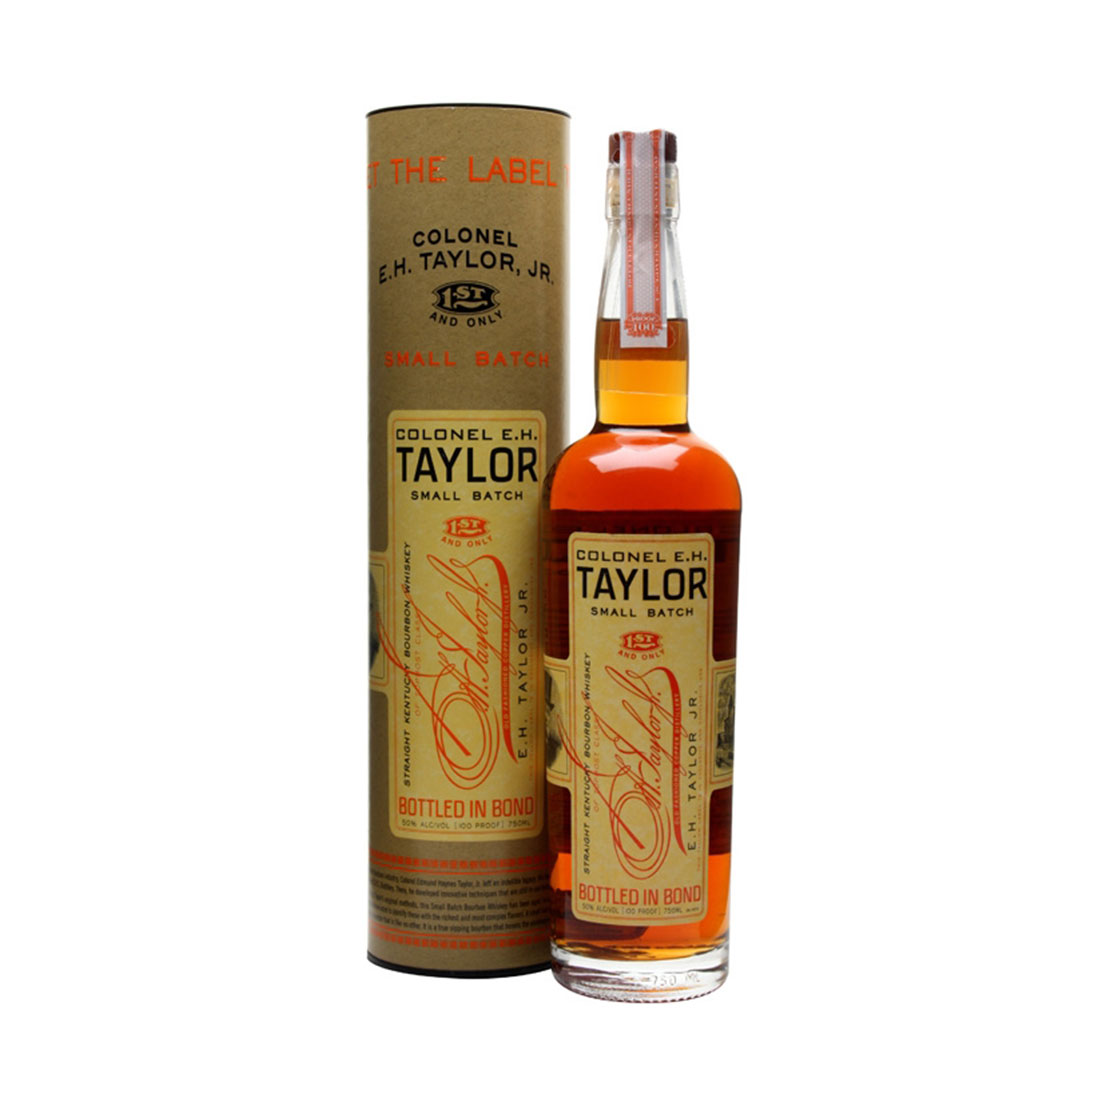 Colonel E.H. Taylor Small Batch Bourbon Whisky 750ml